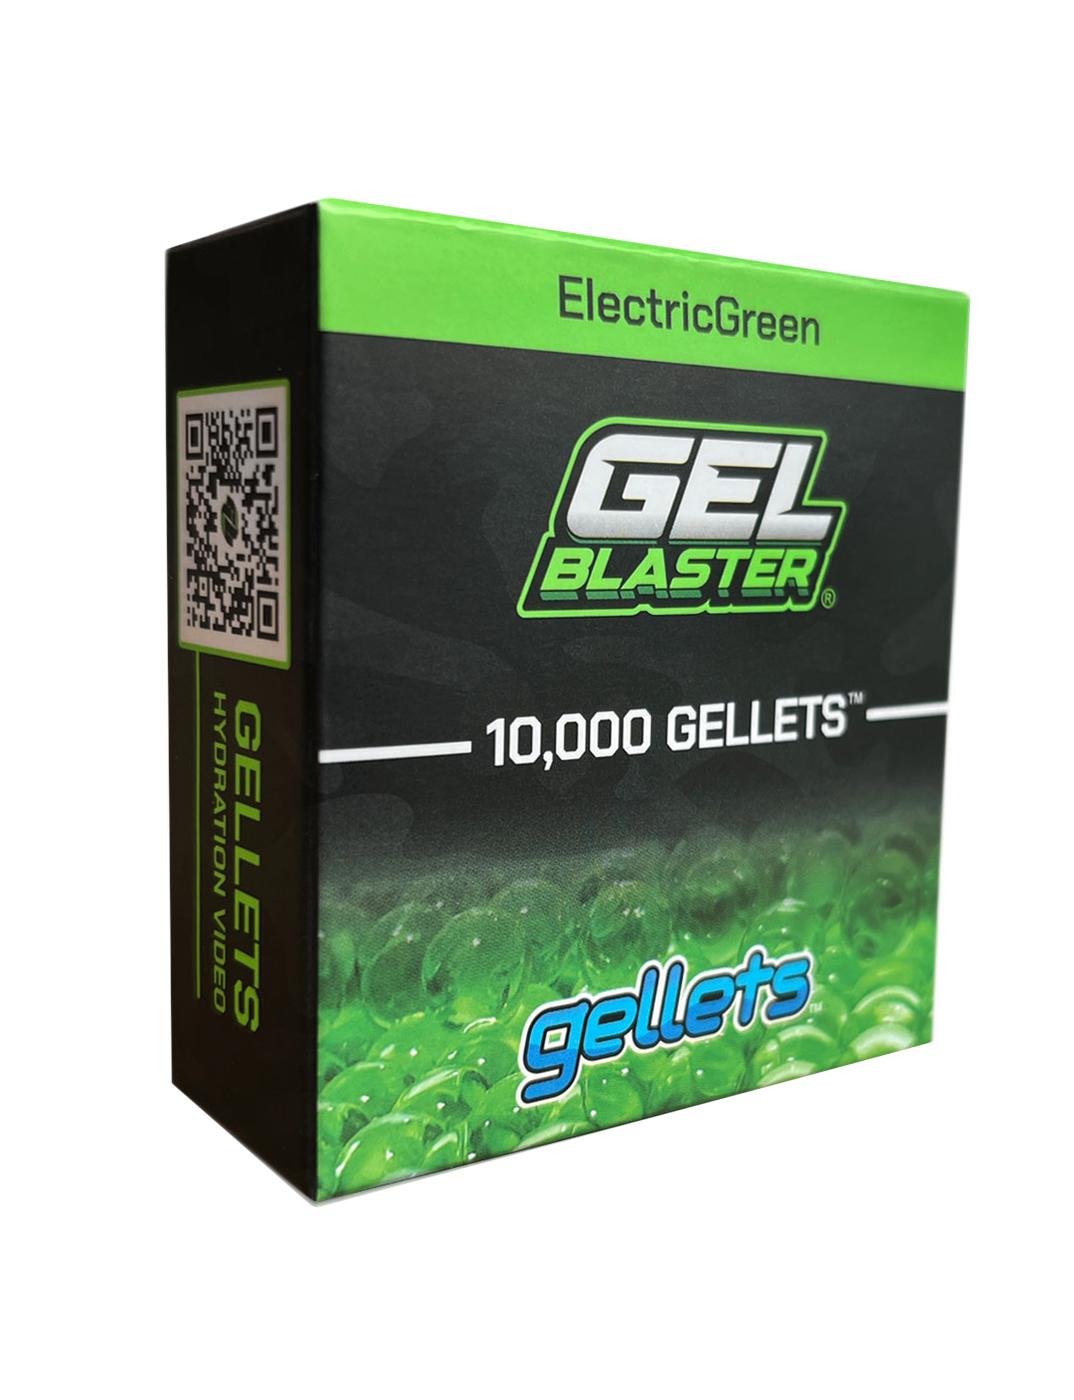 Gel Blaster Gellets Refill Pack - Electric Green; image 1 of 4